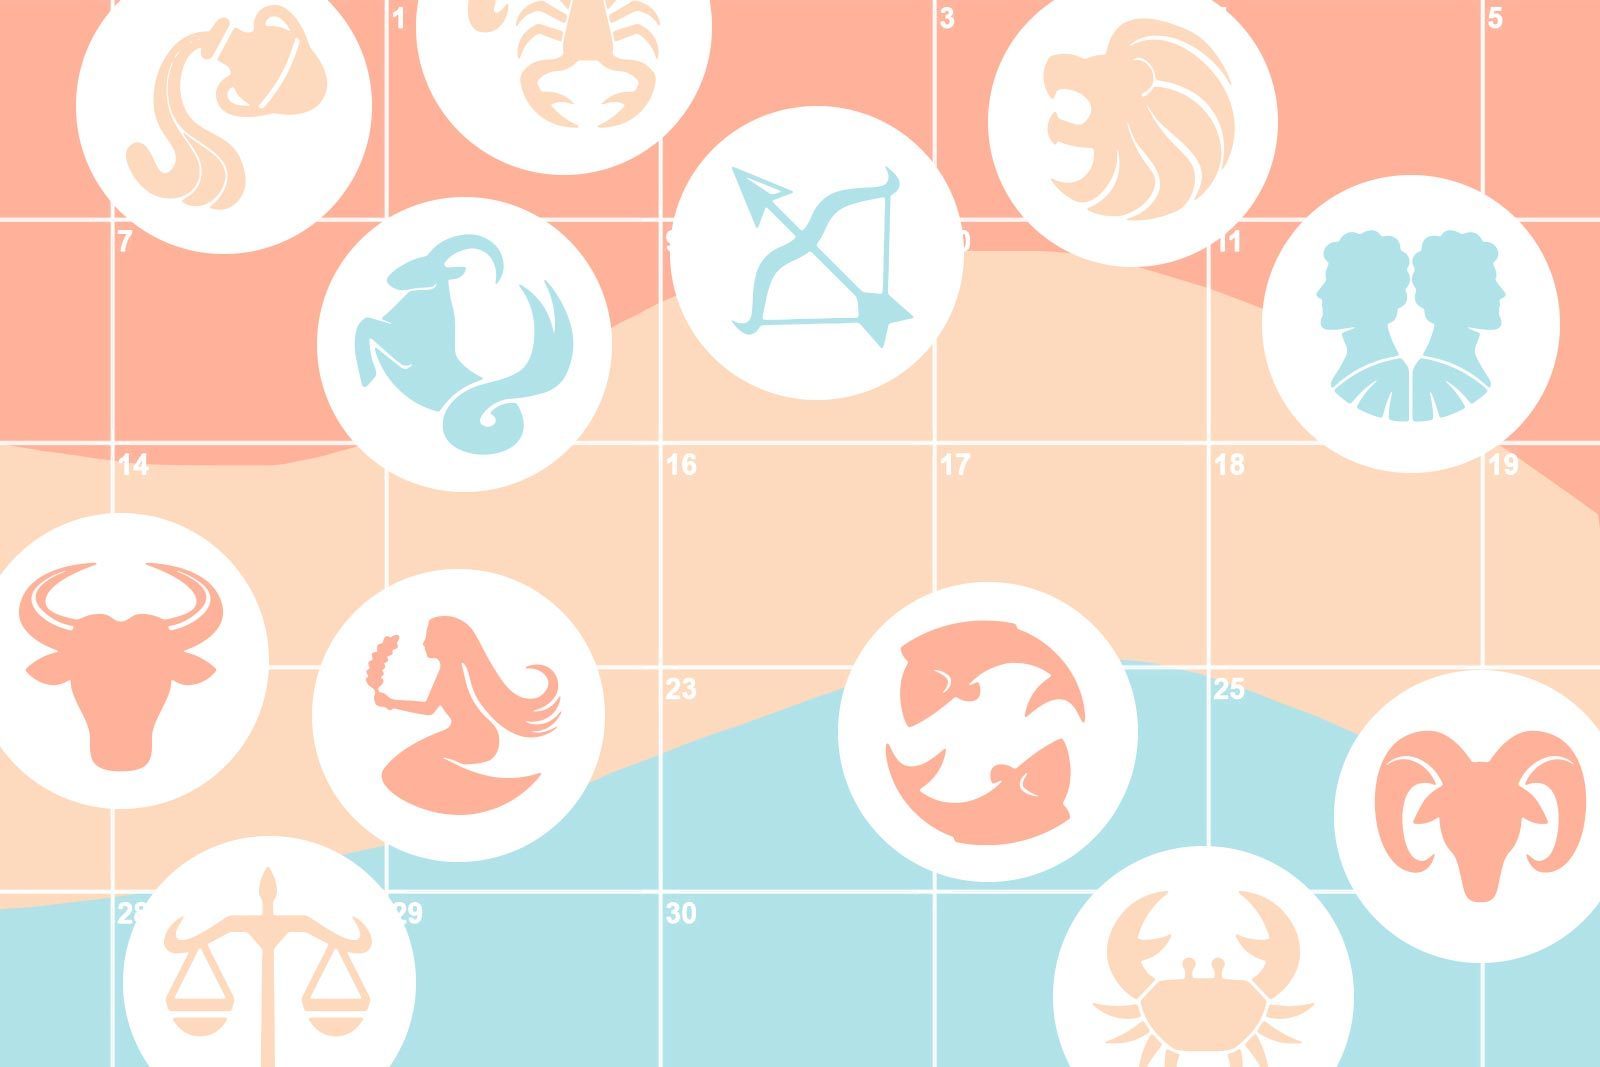 Zodiac symbols on top of calendar page